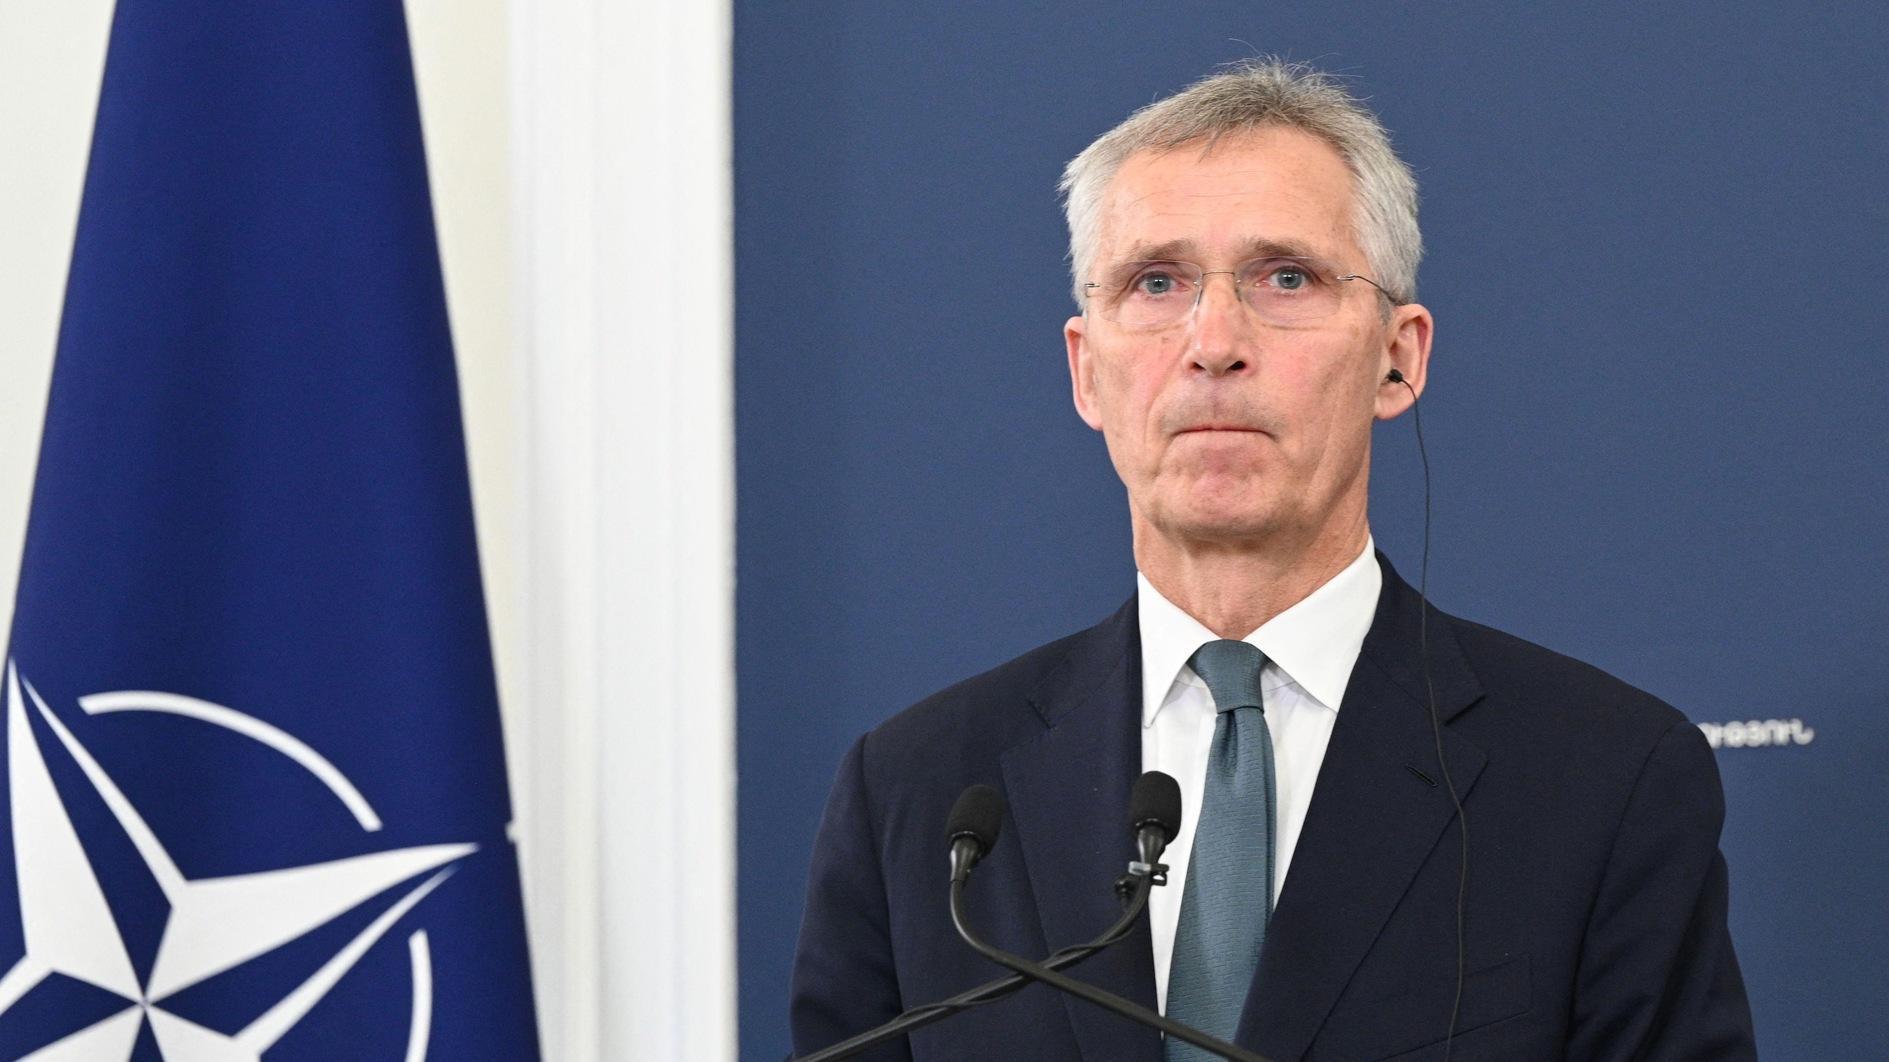 NATO chief urges Armenia, Azerbaijan peace deal